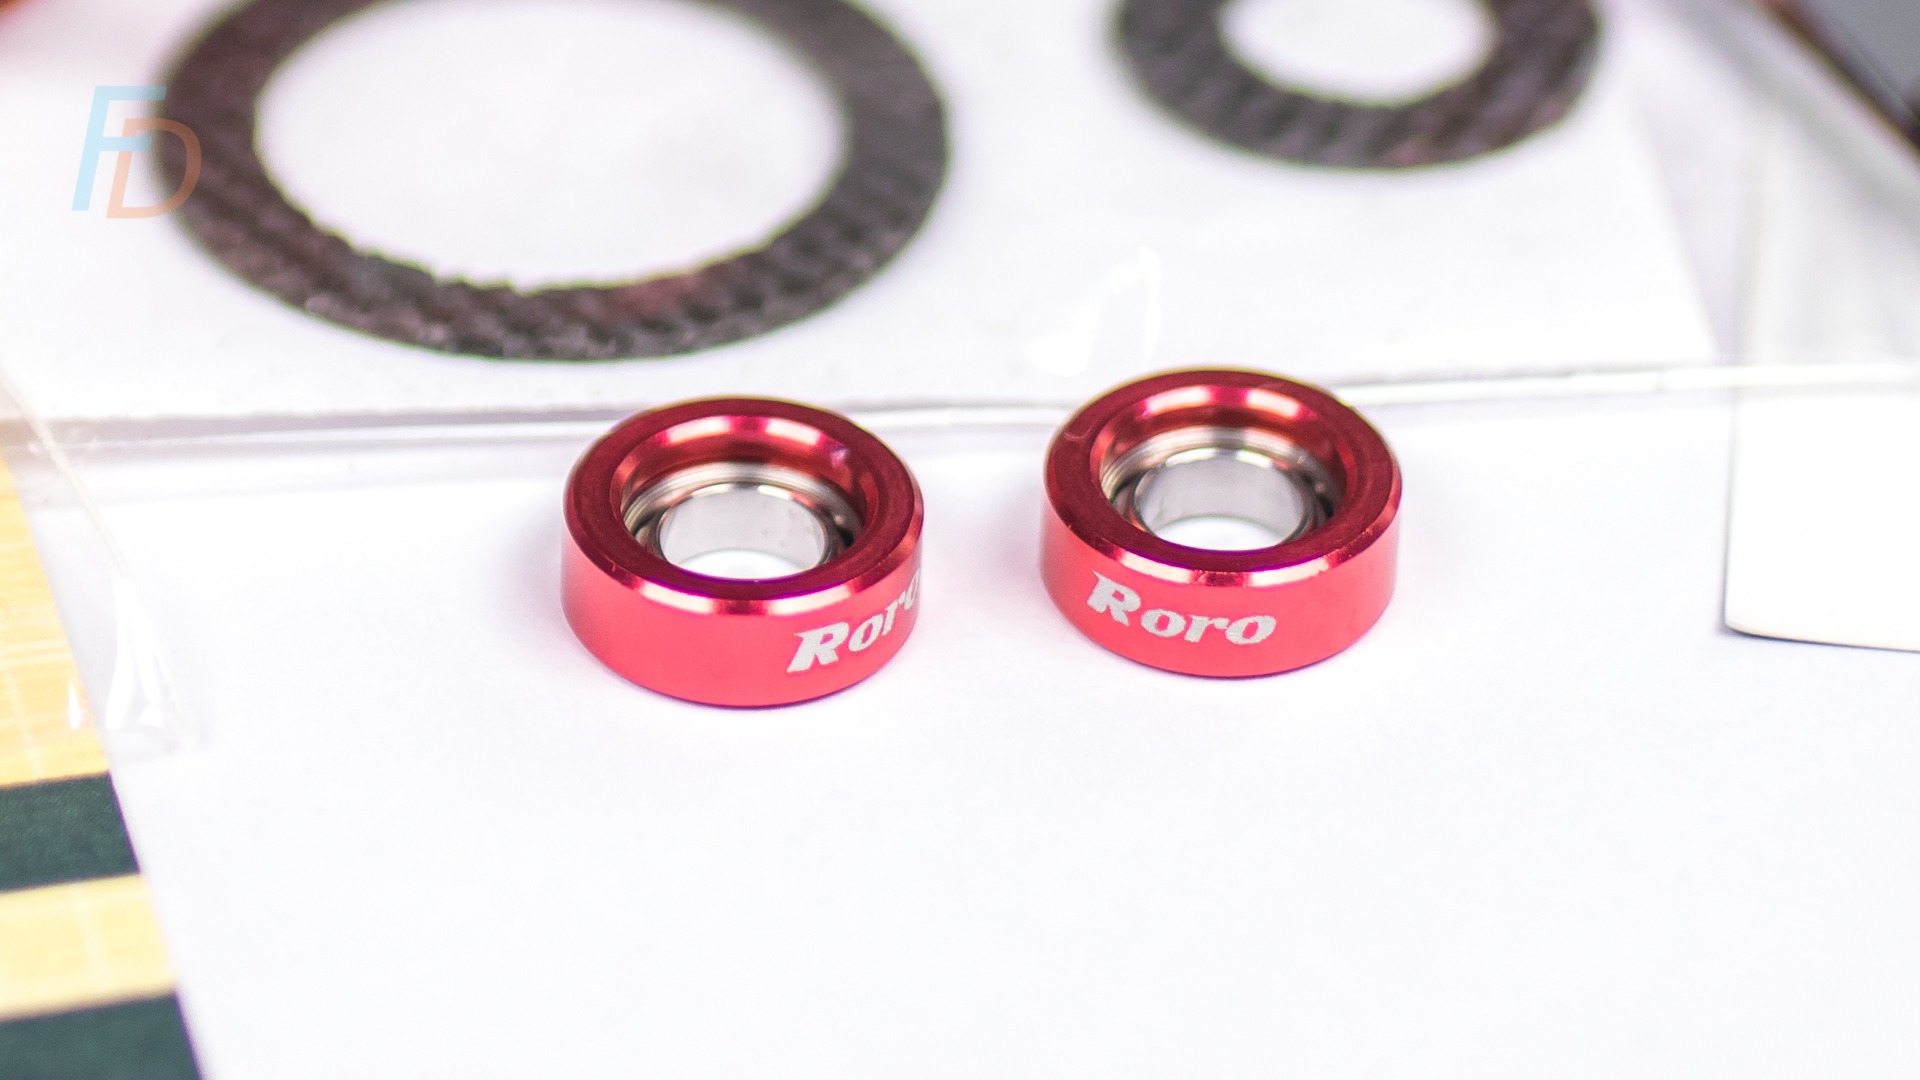 Roro micro bearings